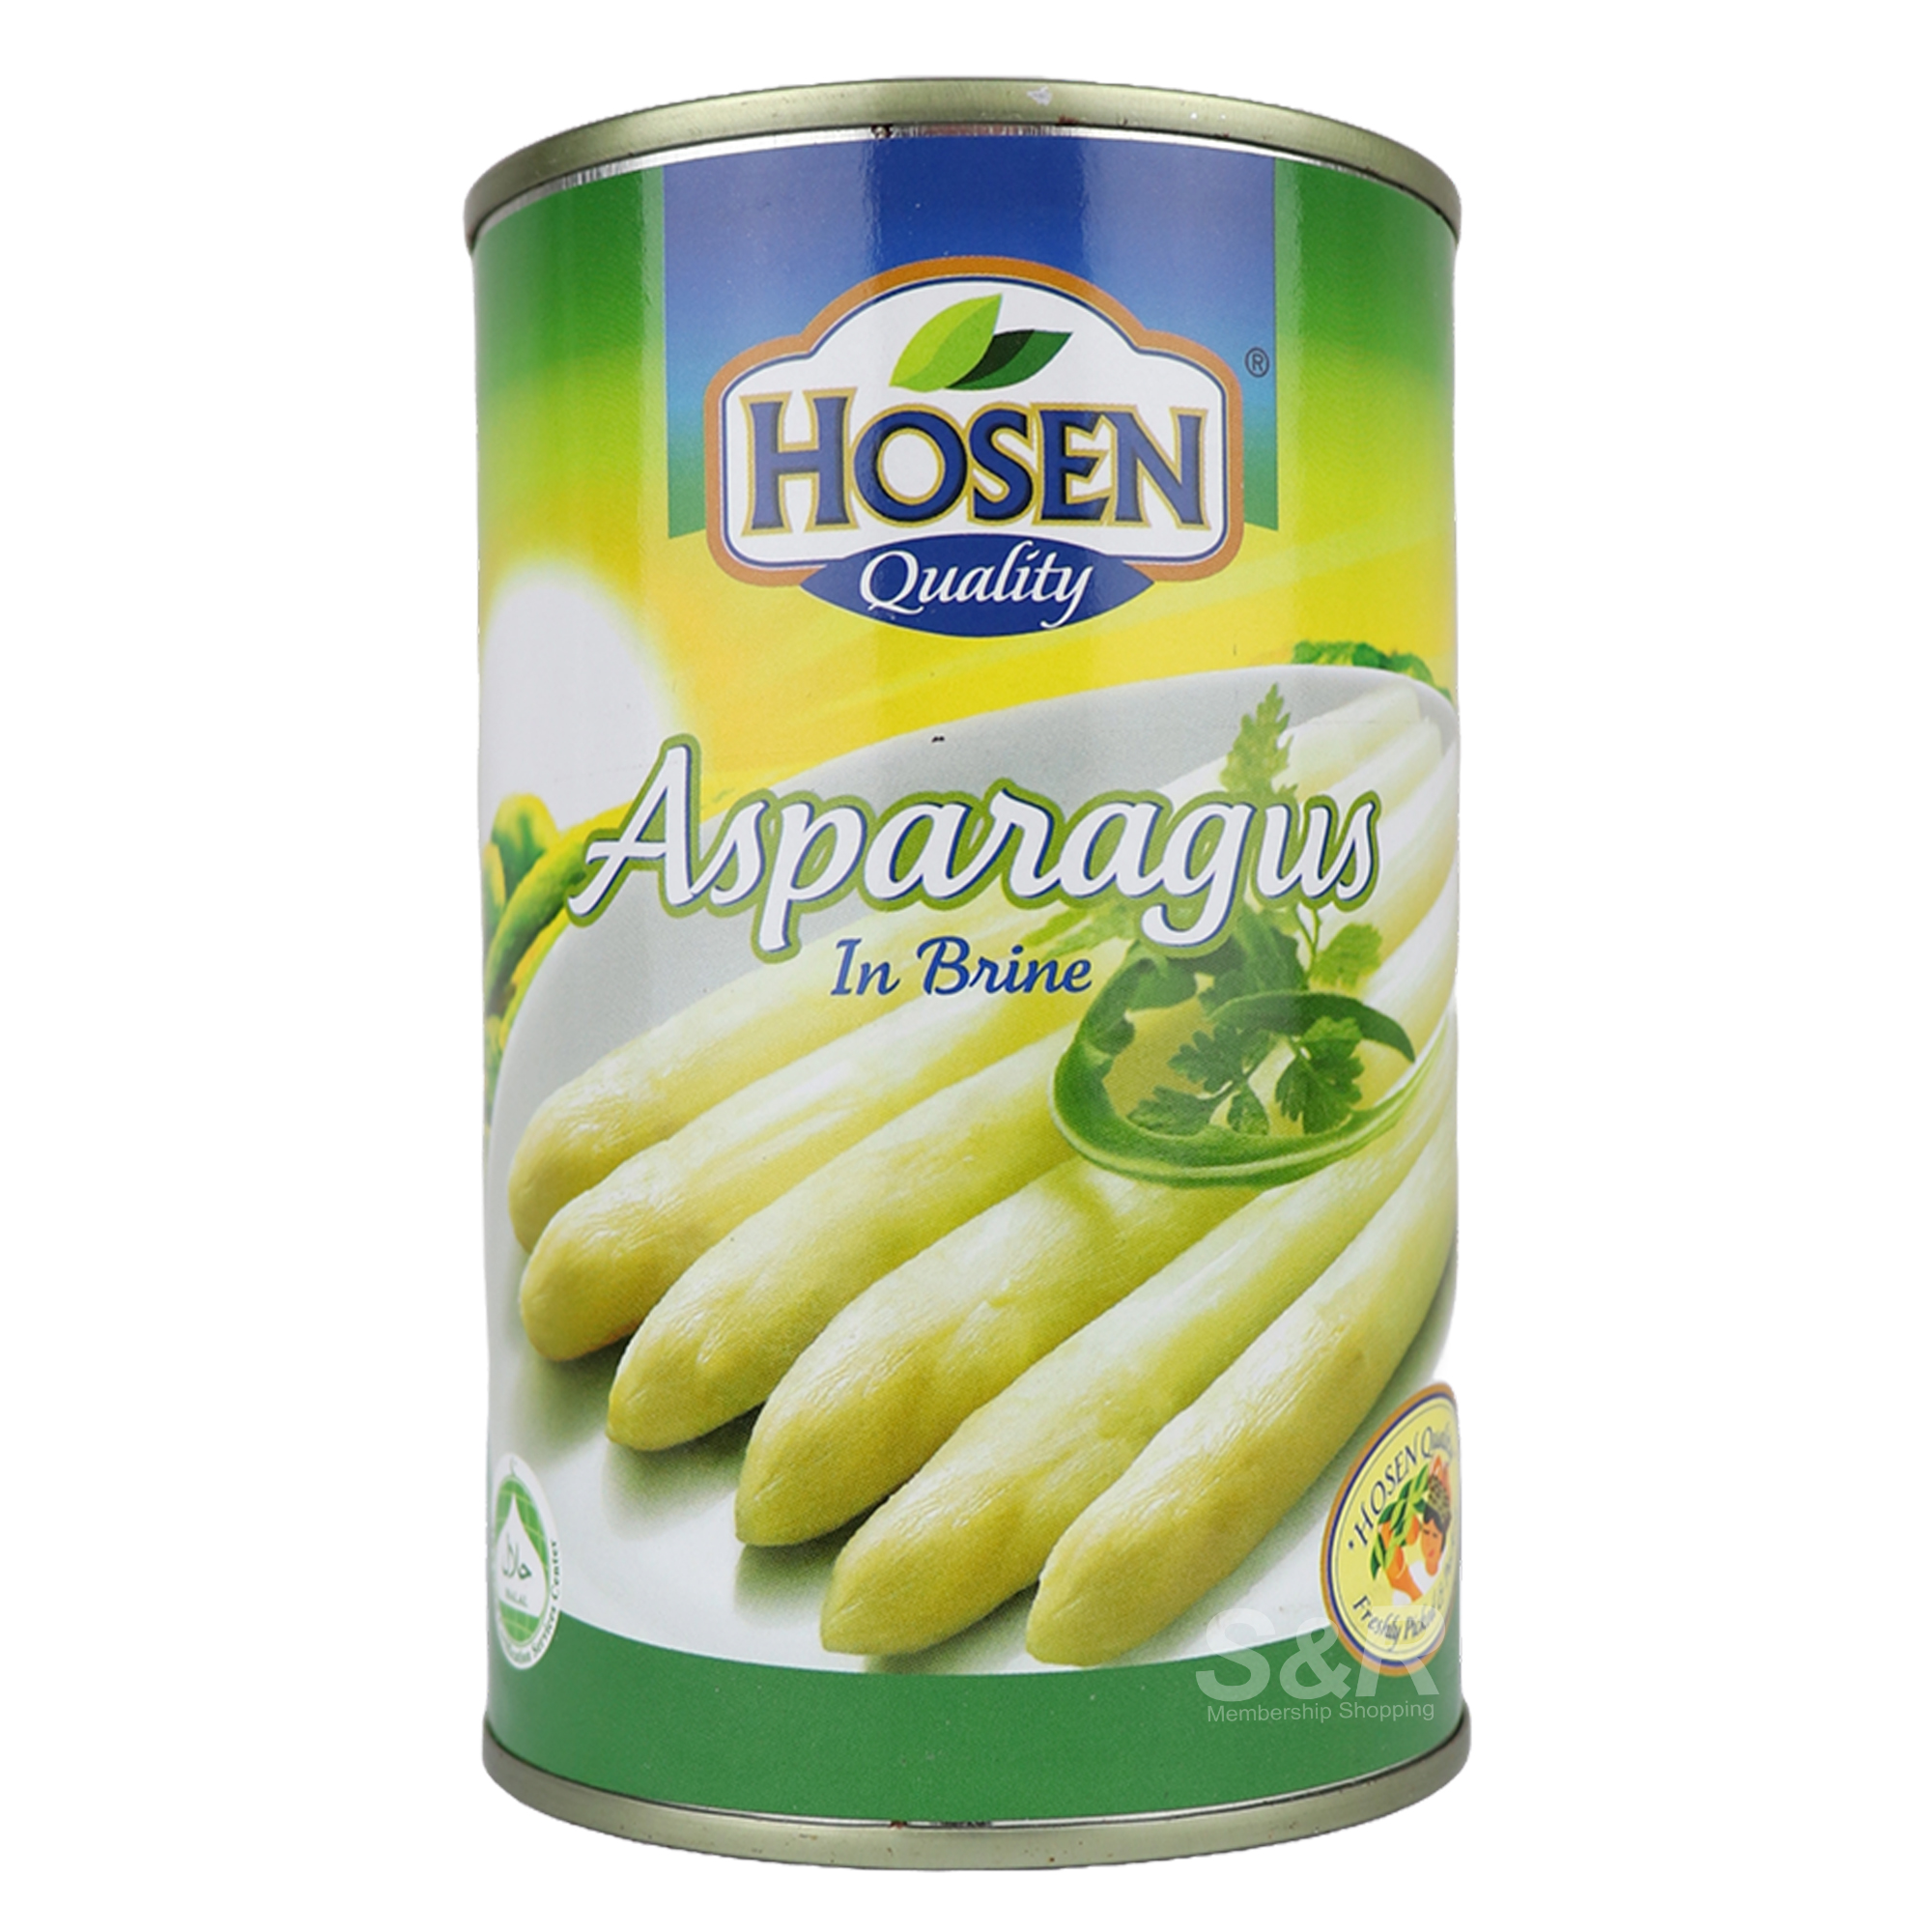 Hosen Quality Asparagus In Brine 430g